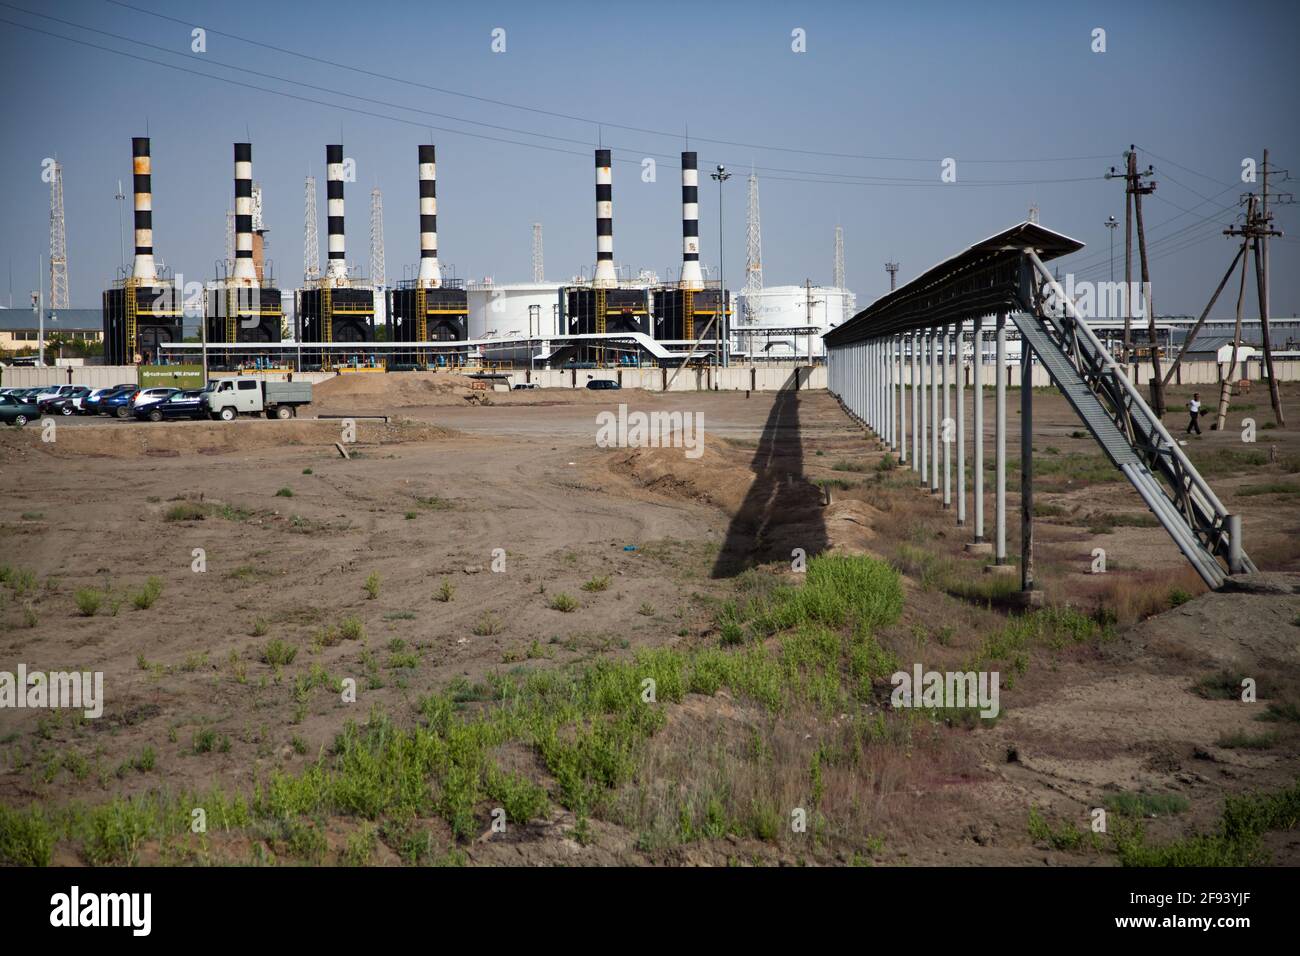 Oil heating and pumping station in desert. Transporting terminal Kaztransoil.. Stock Photo